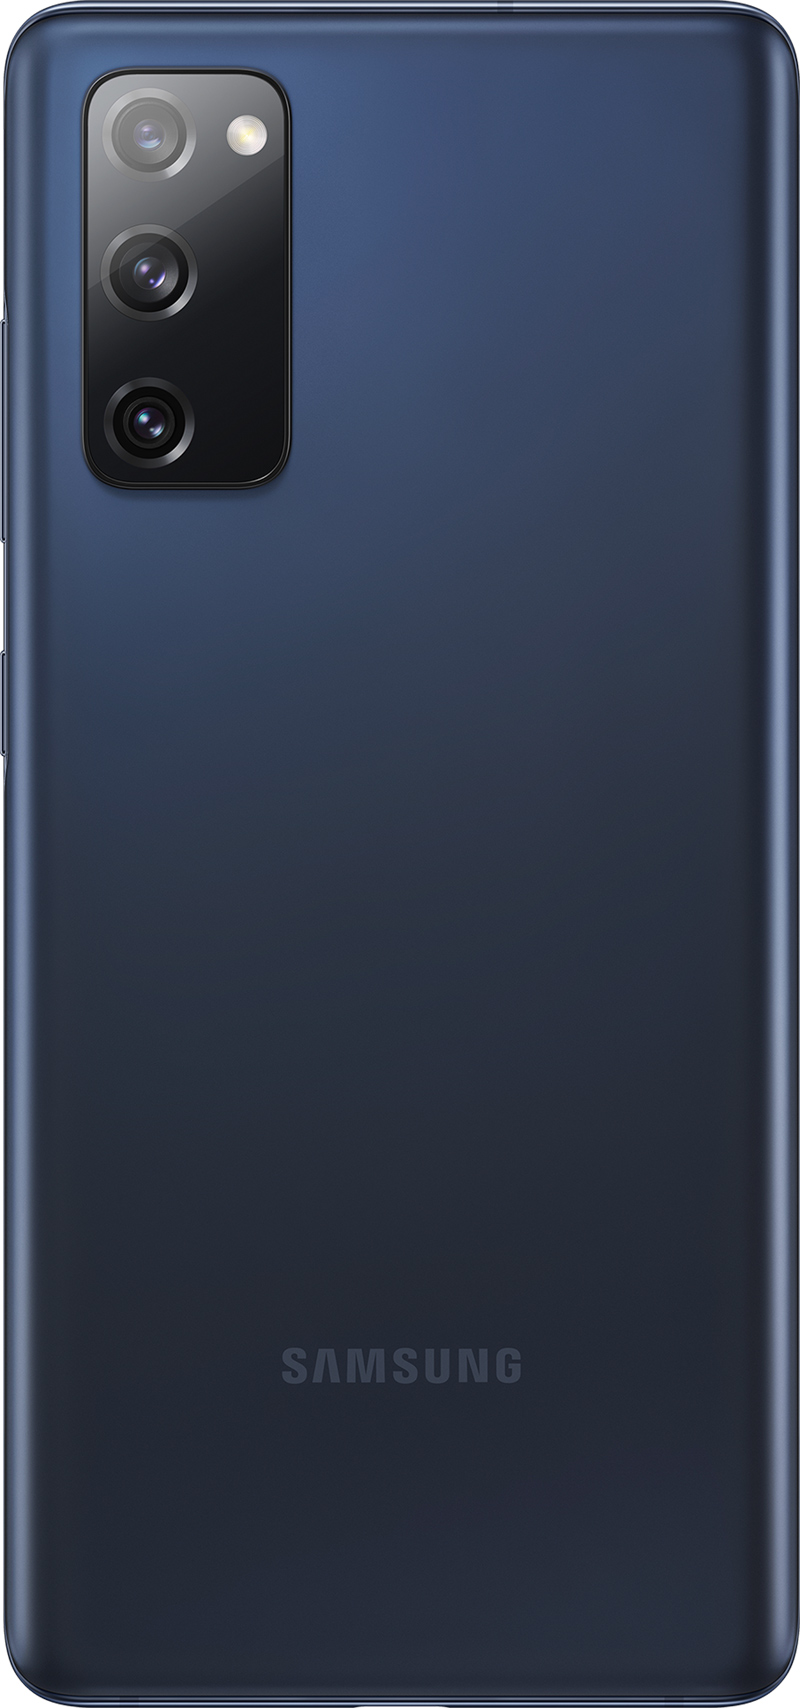 Samsung Galaxy S20 FE 5G bleu 128Go